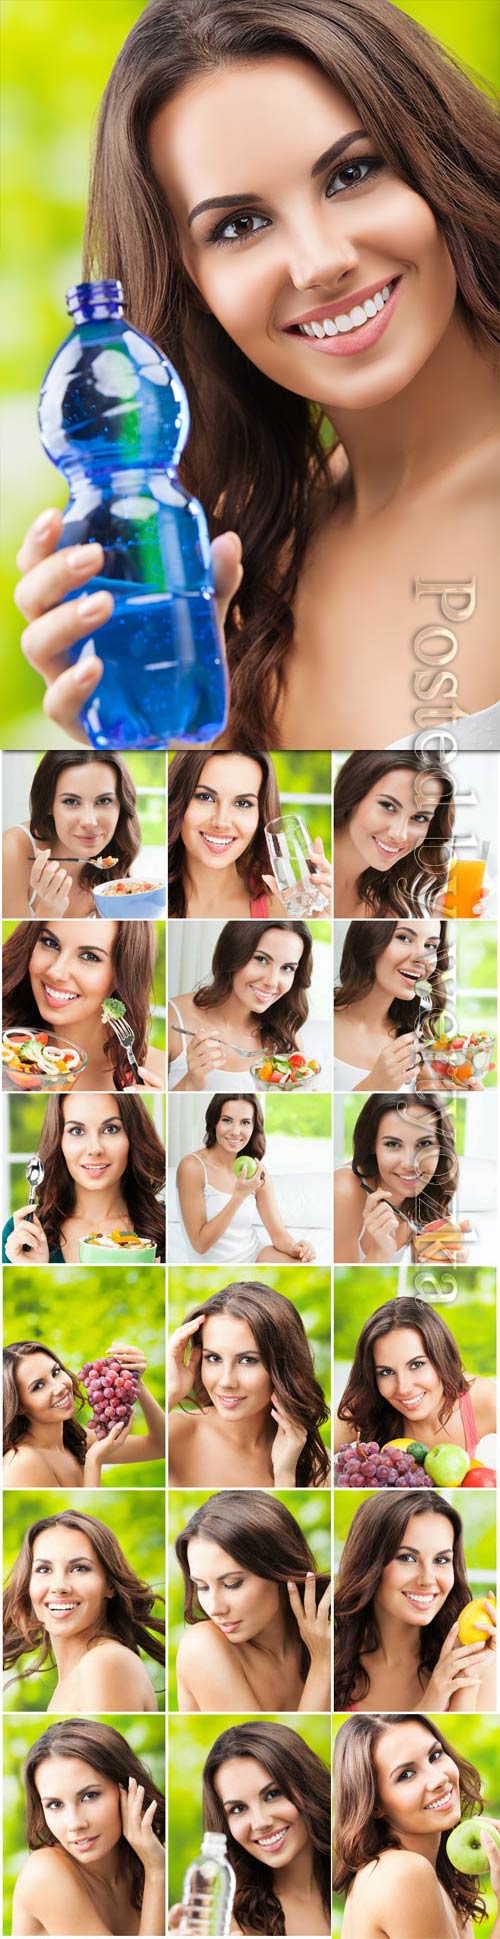 Girl promoting healthy food stock photo